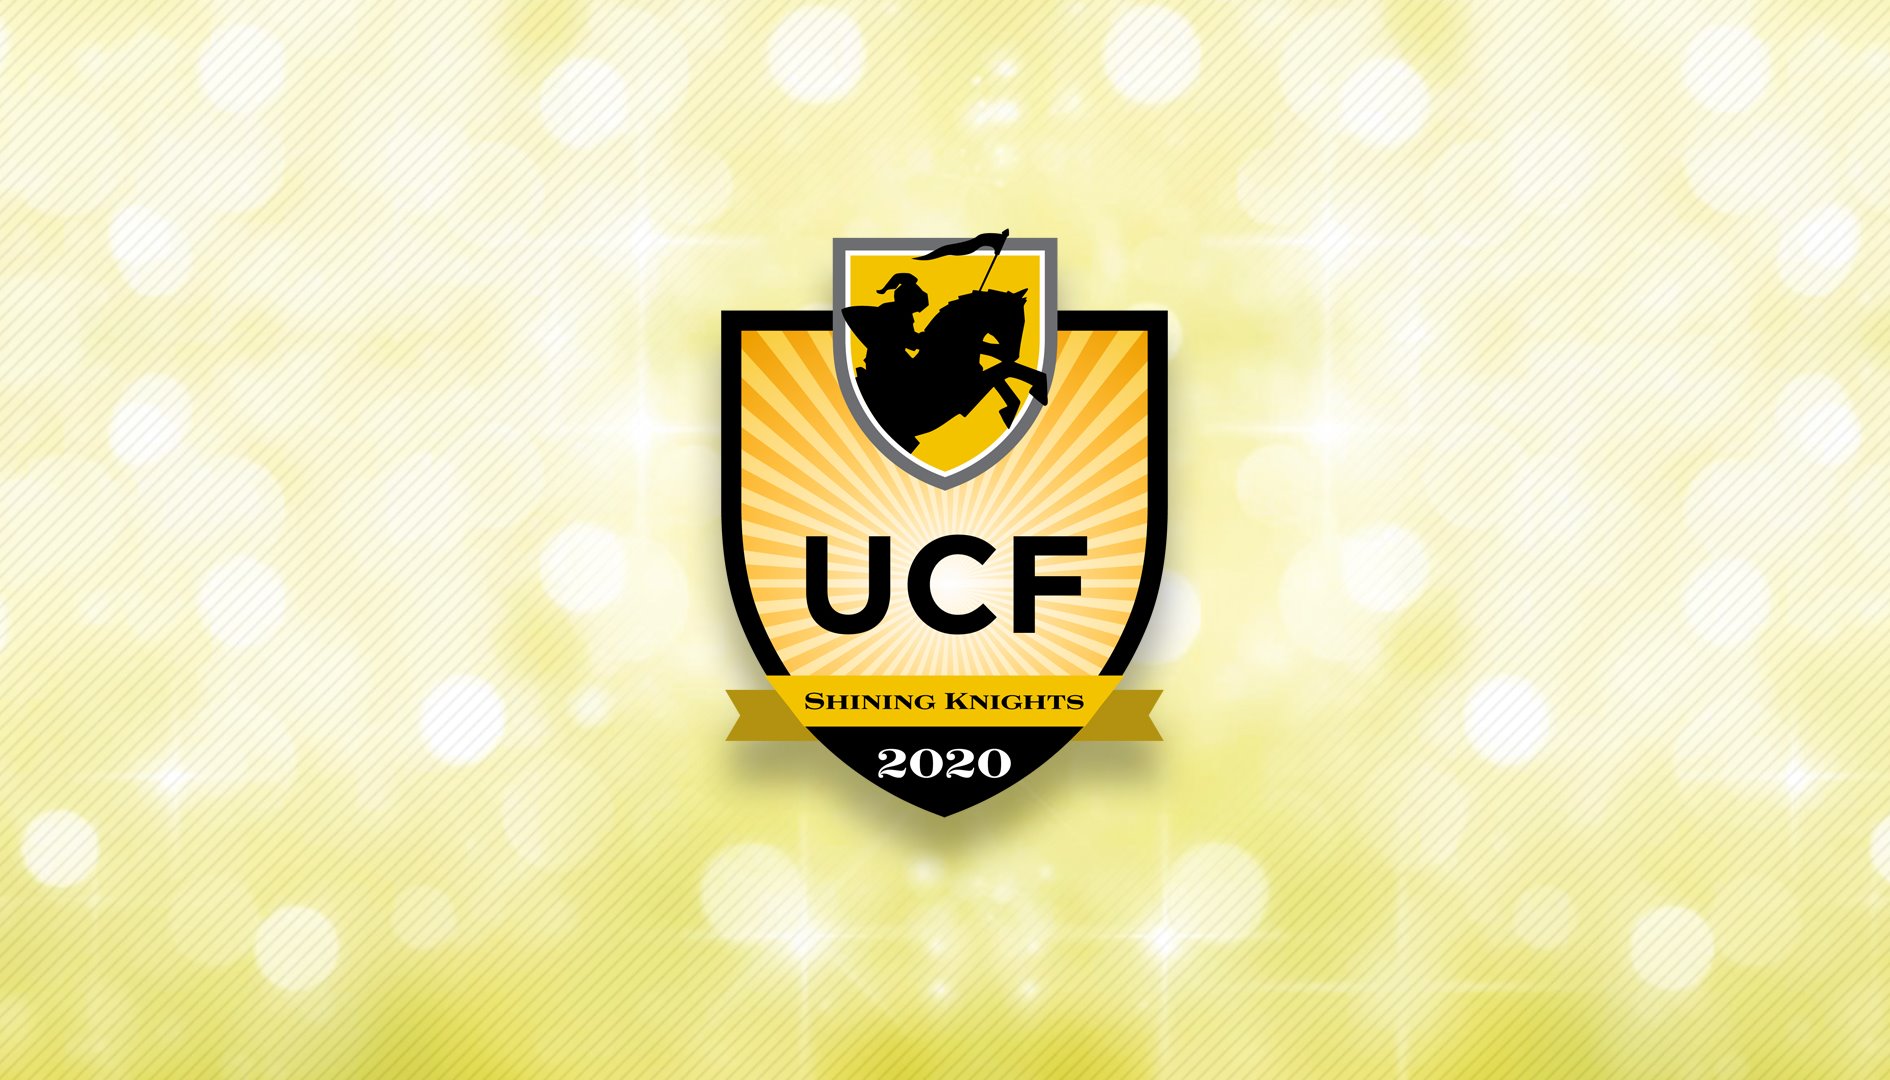 Read 2020 Shining Knights Alumni Awards by UCF Advancement